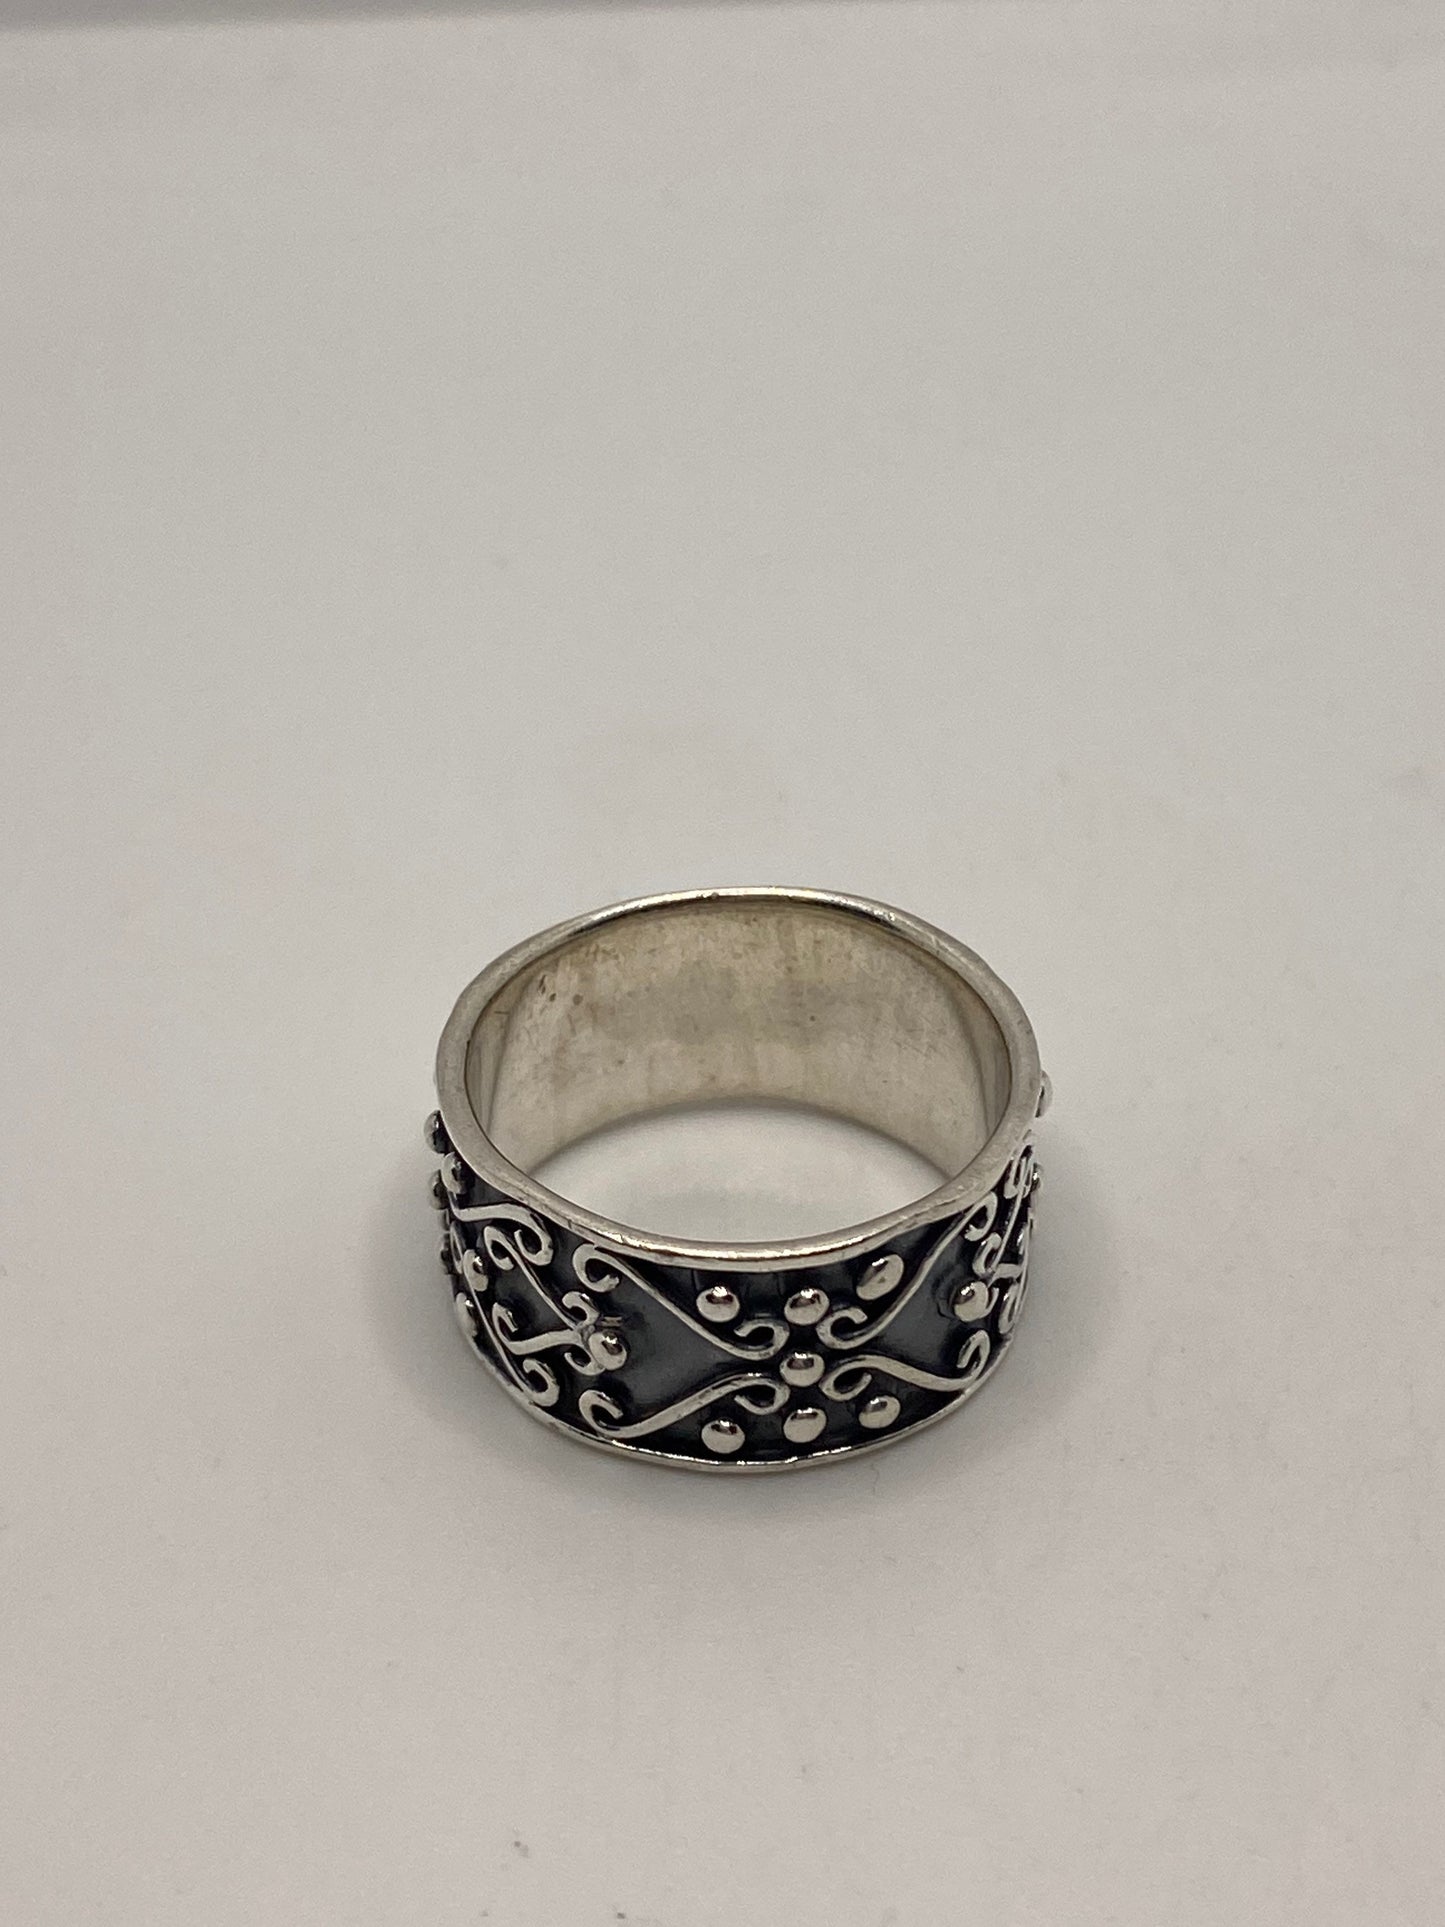 Vintage 925 Sterling Silver Antiqued Band Ring Size 9